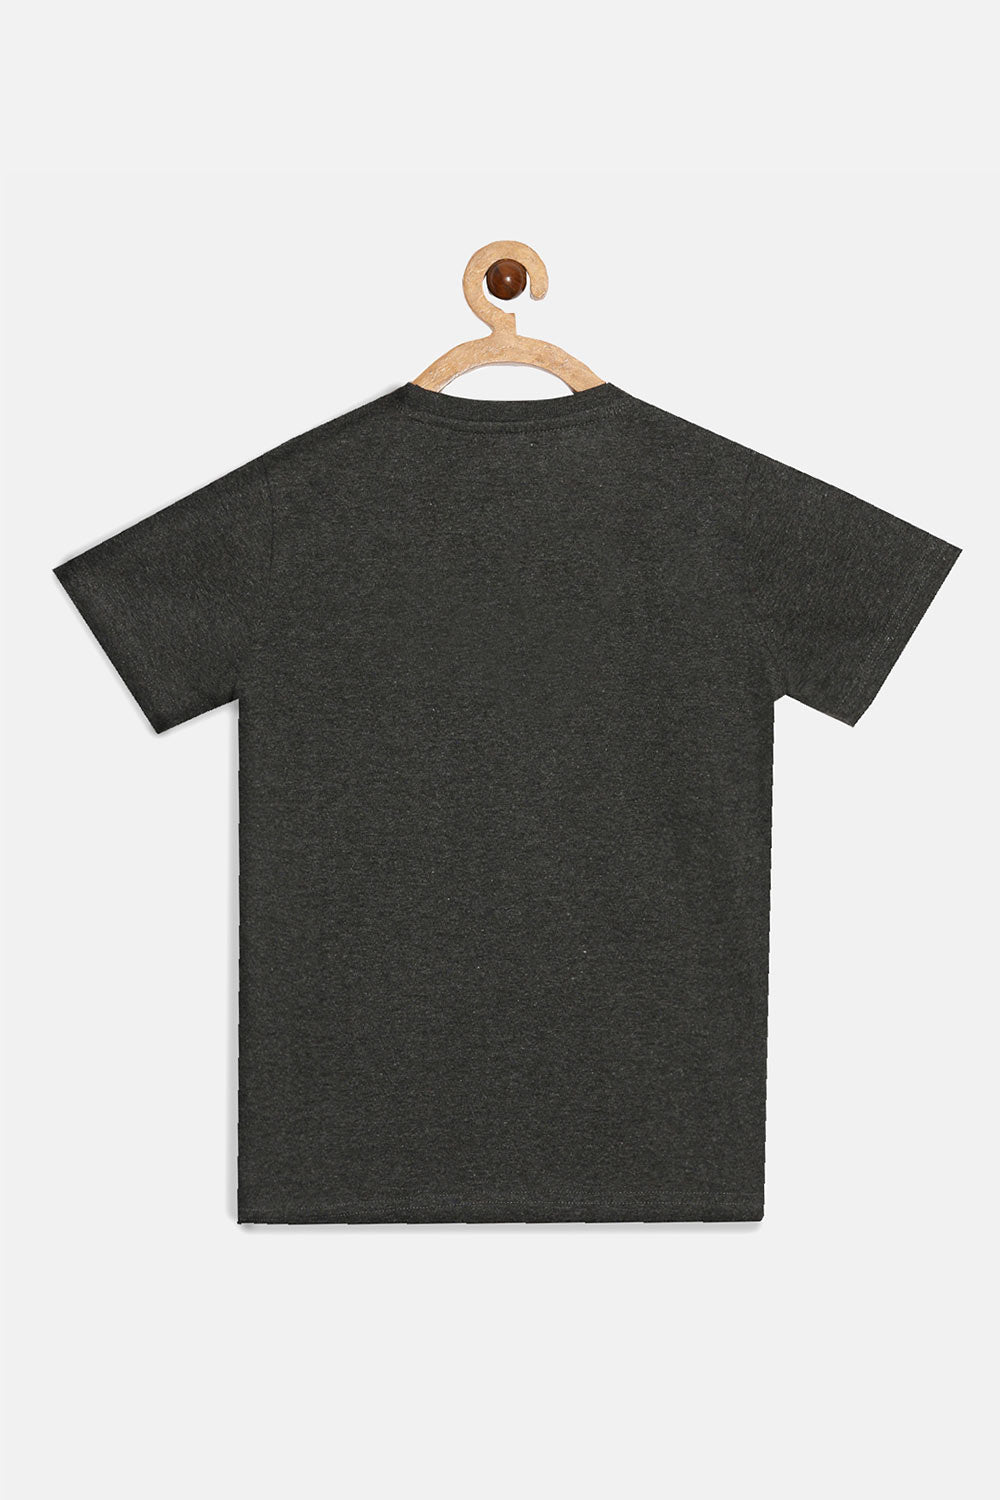 The Young Future - Boys T-shirt - Grey  - BC11